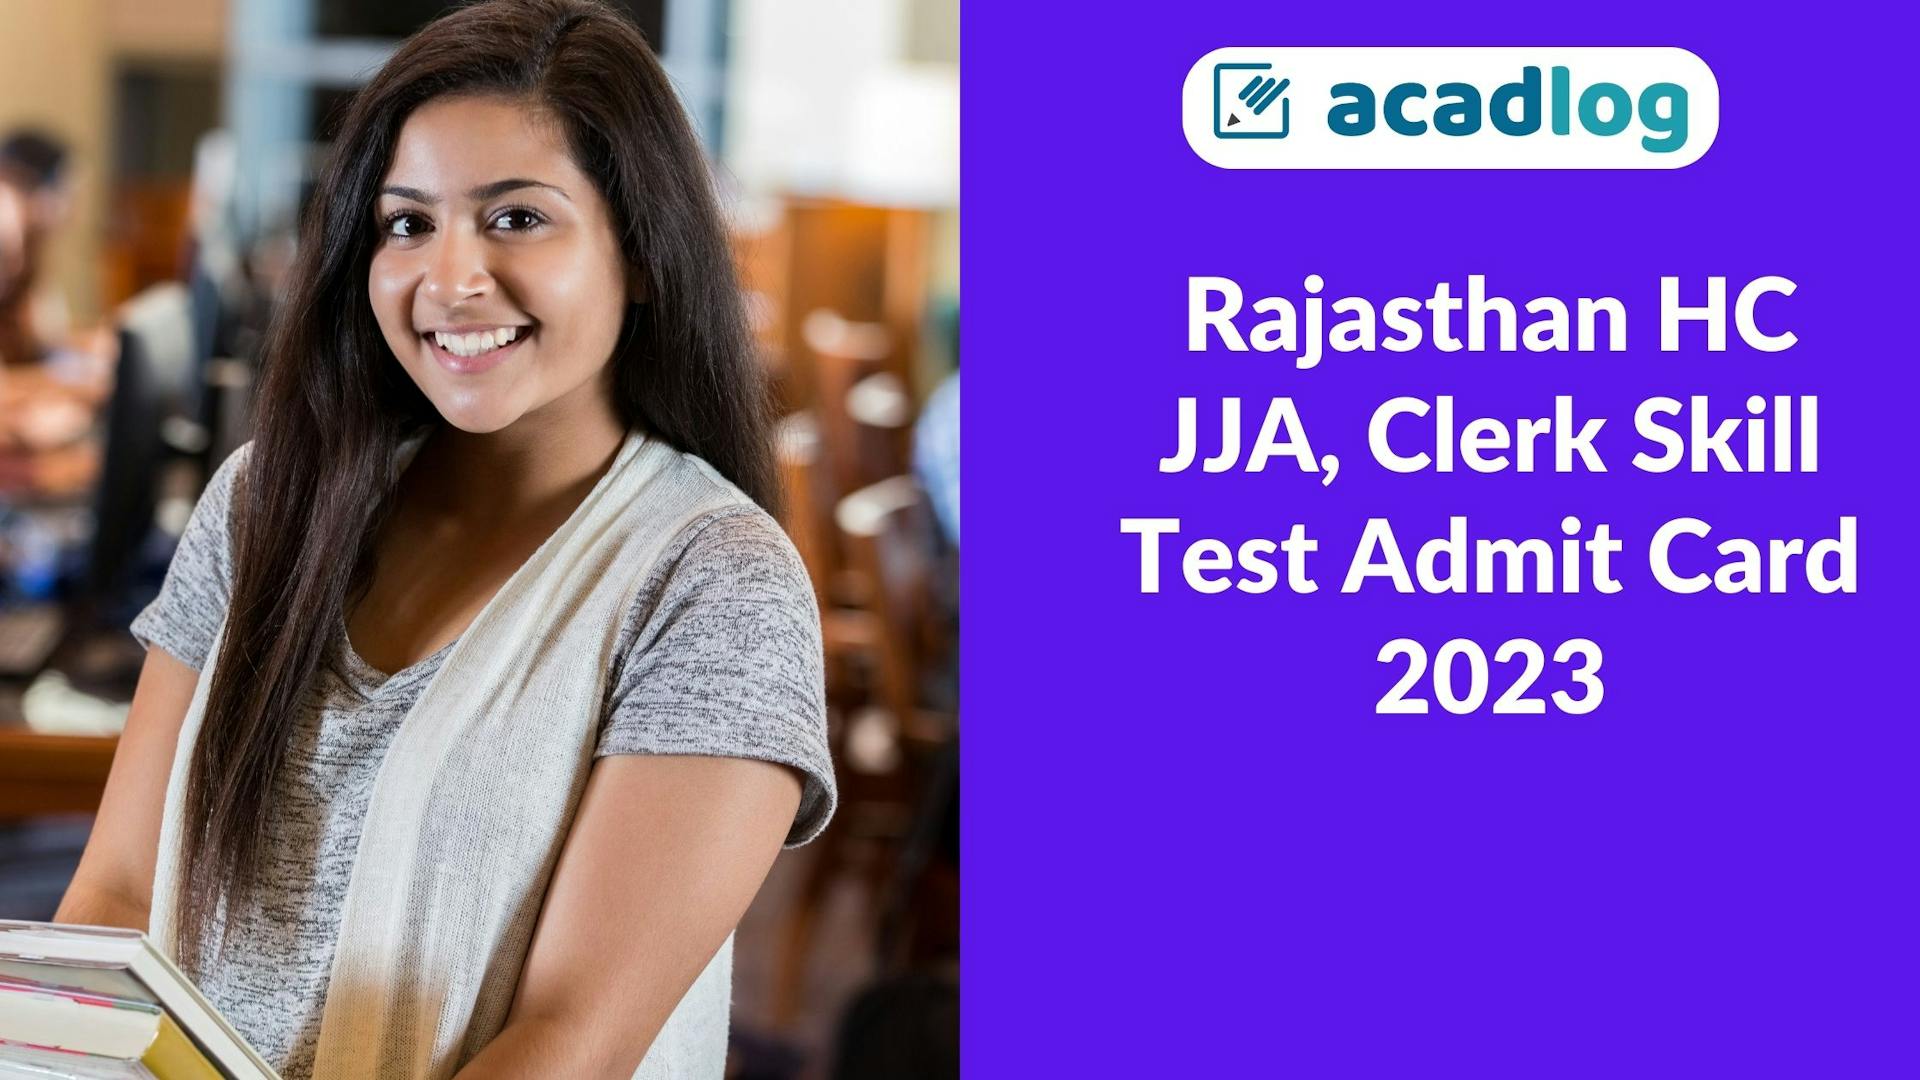 Rajasthan High Court Junior Judicial Assistant JJA, Junior Assistant, Clerk Grade II Recruitment 2022 Exam Skill Test Admit Card 2023